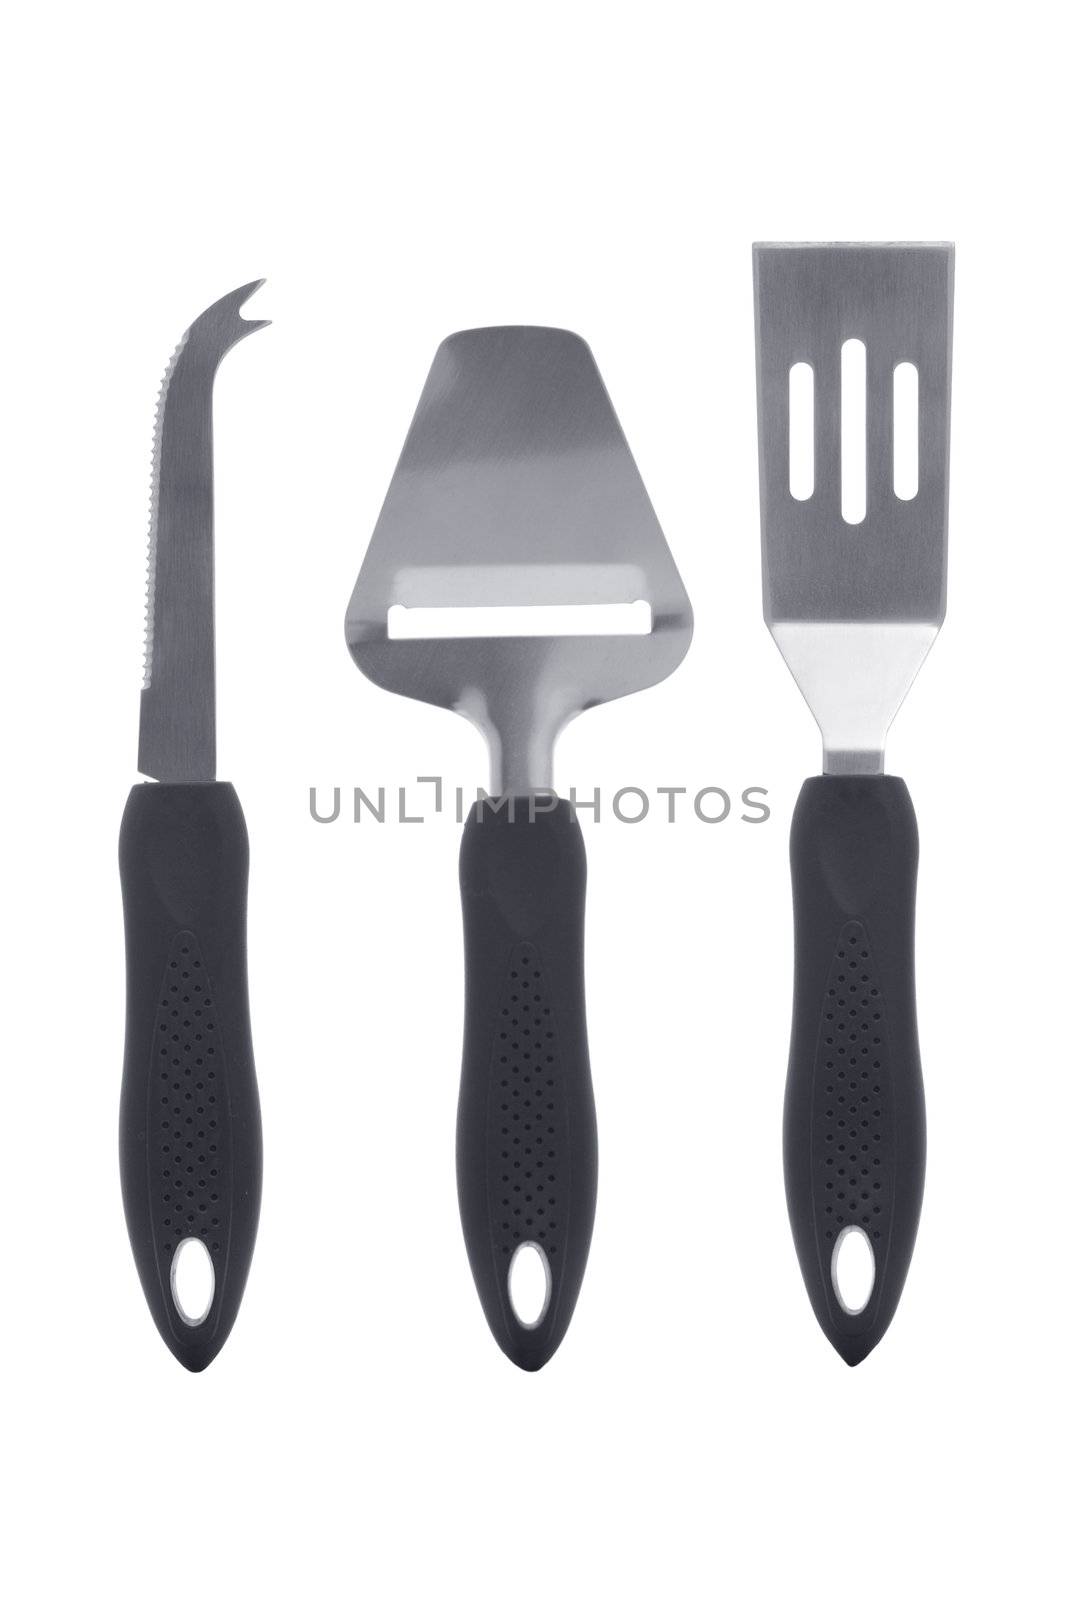 Set of three kitchen utensils isolated on white background